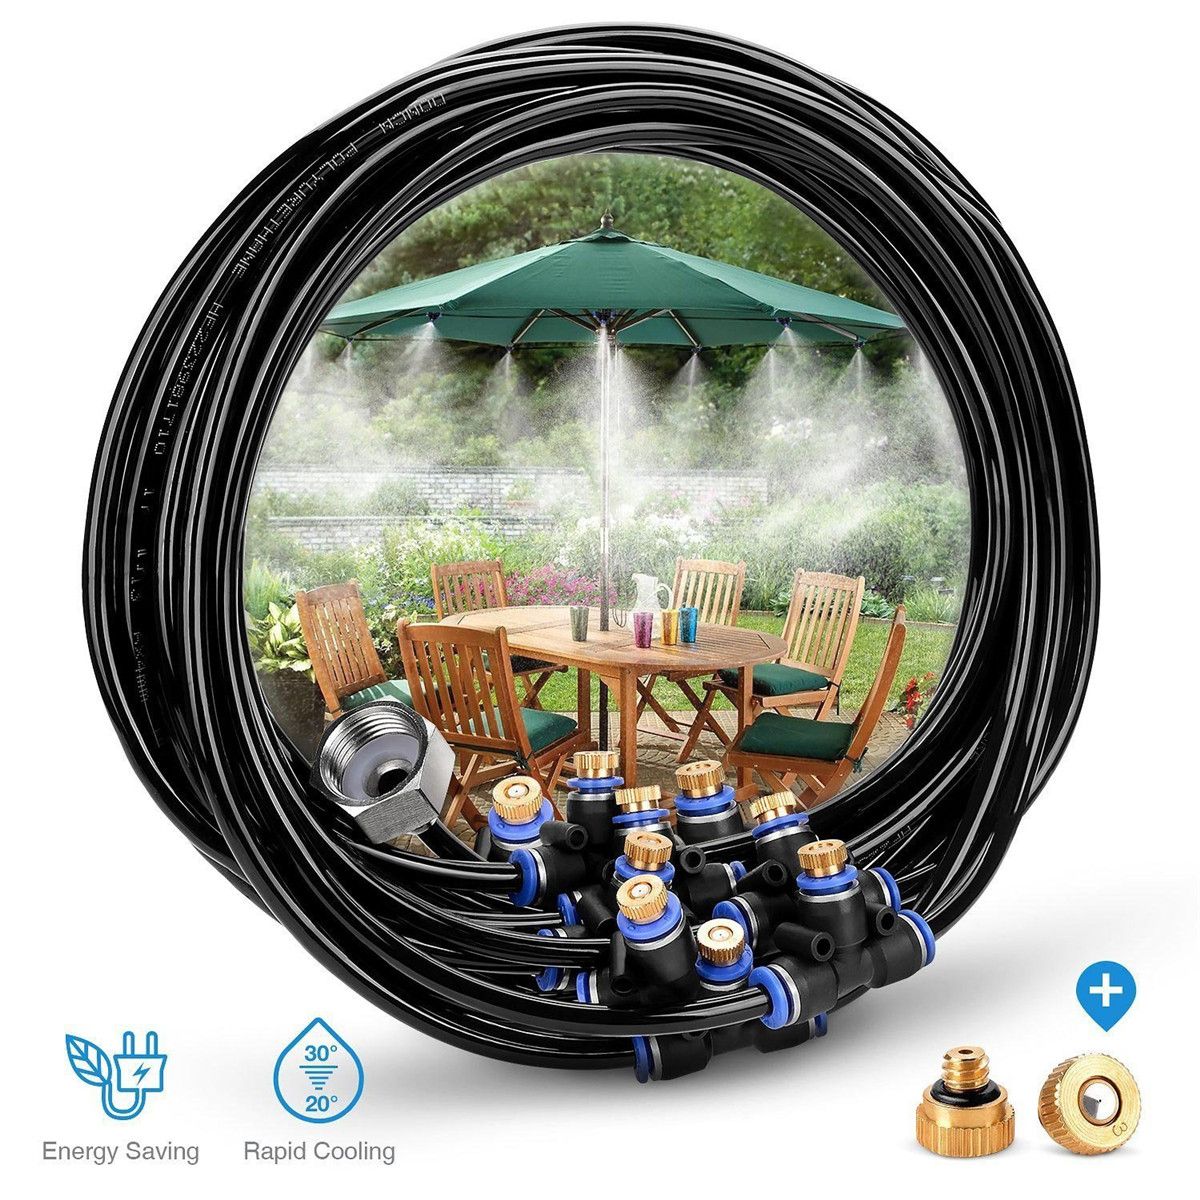 8M-Outdoor-Mist-Coolant-System-Water-Sprinkler-Garden-Patio-Mister-Cooling-Spray-Kits-1346712